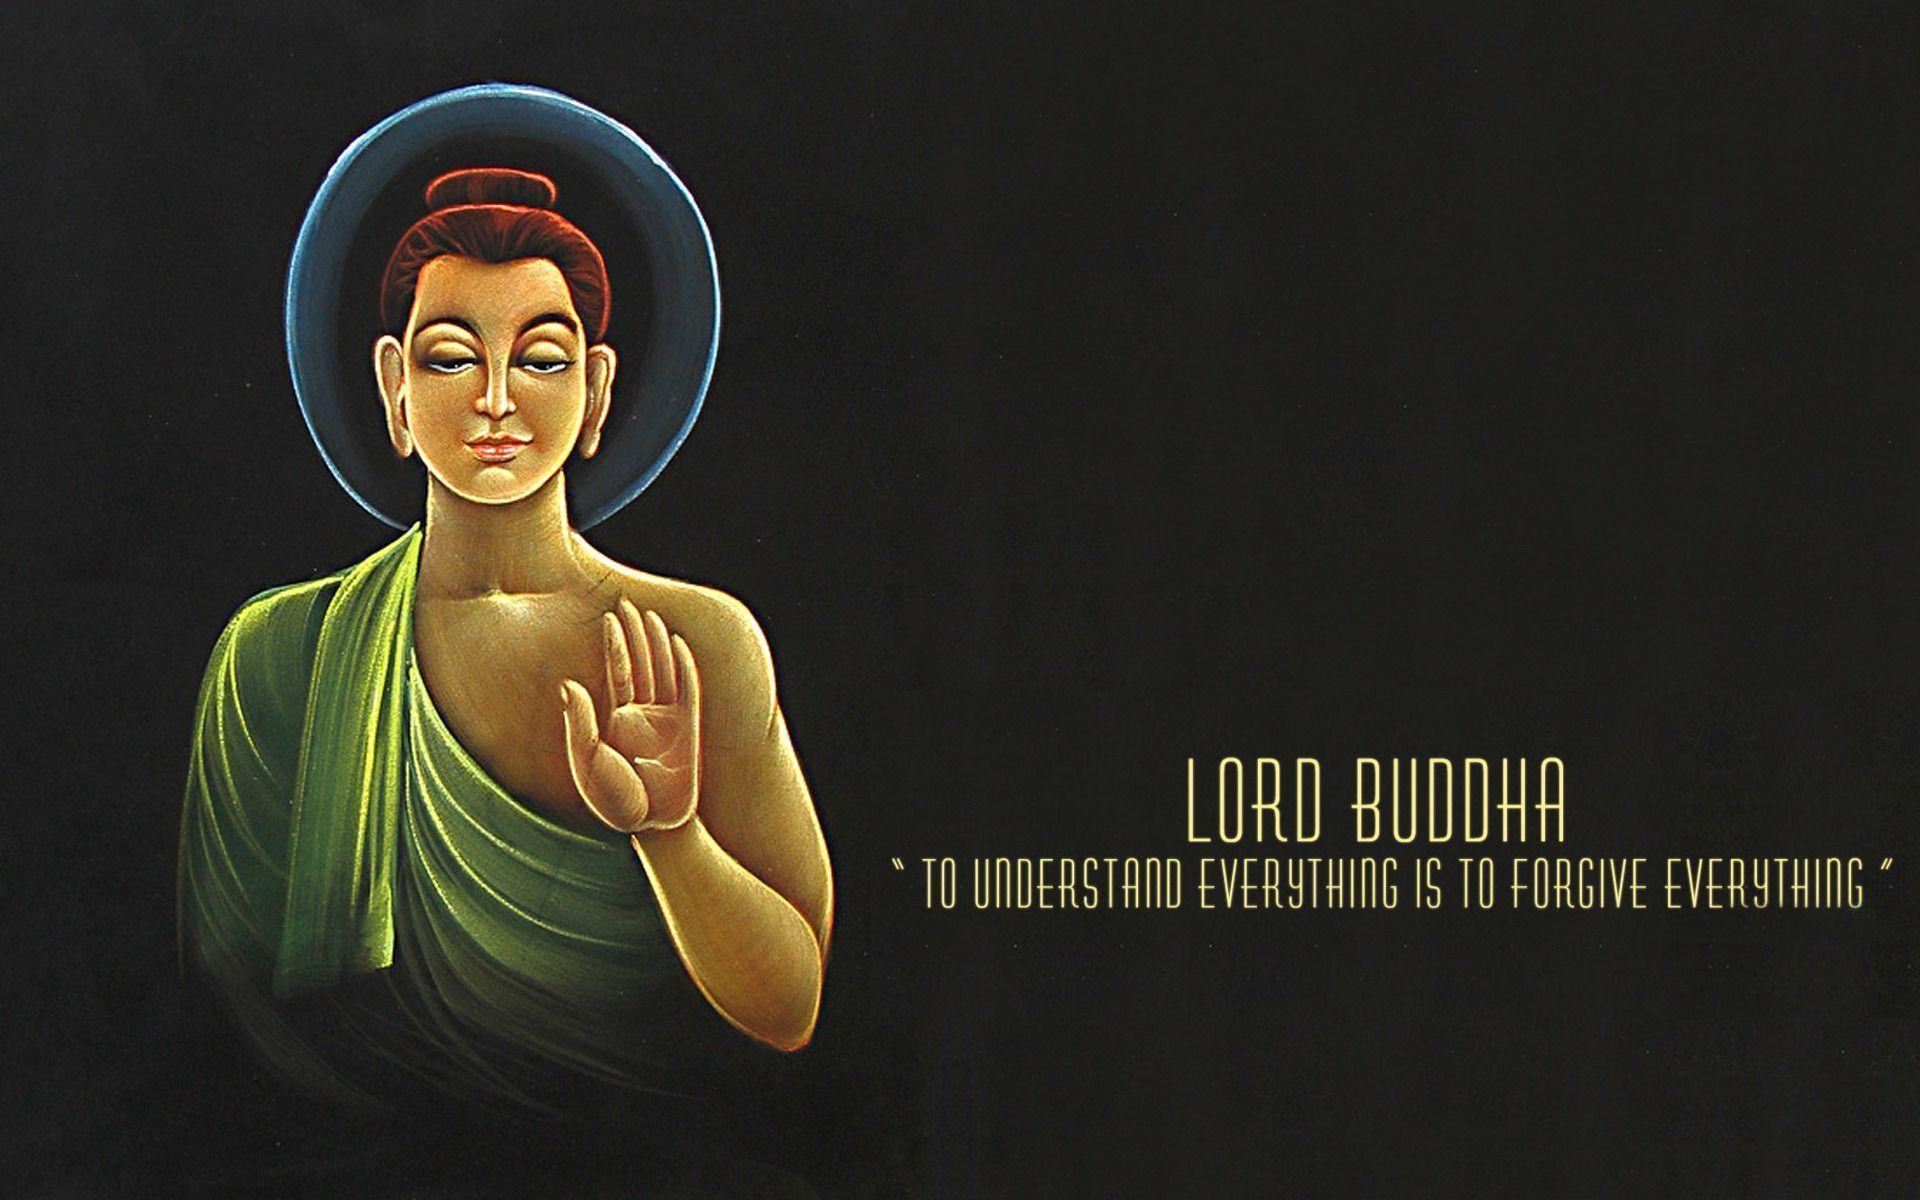 Buddha Quotes On Love